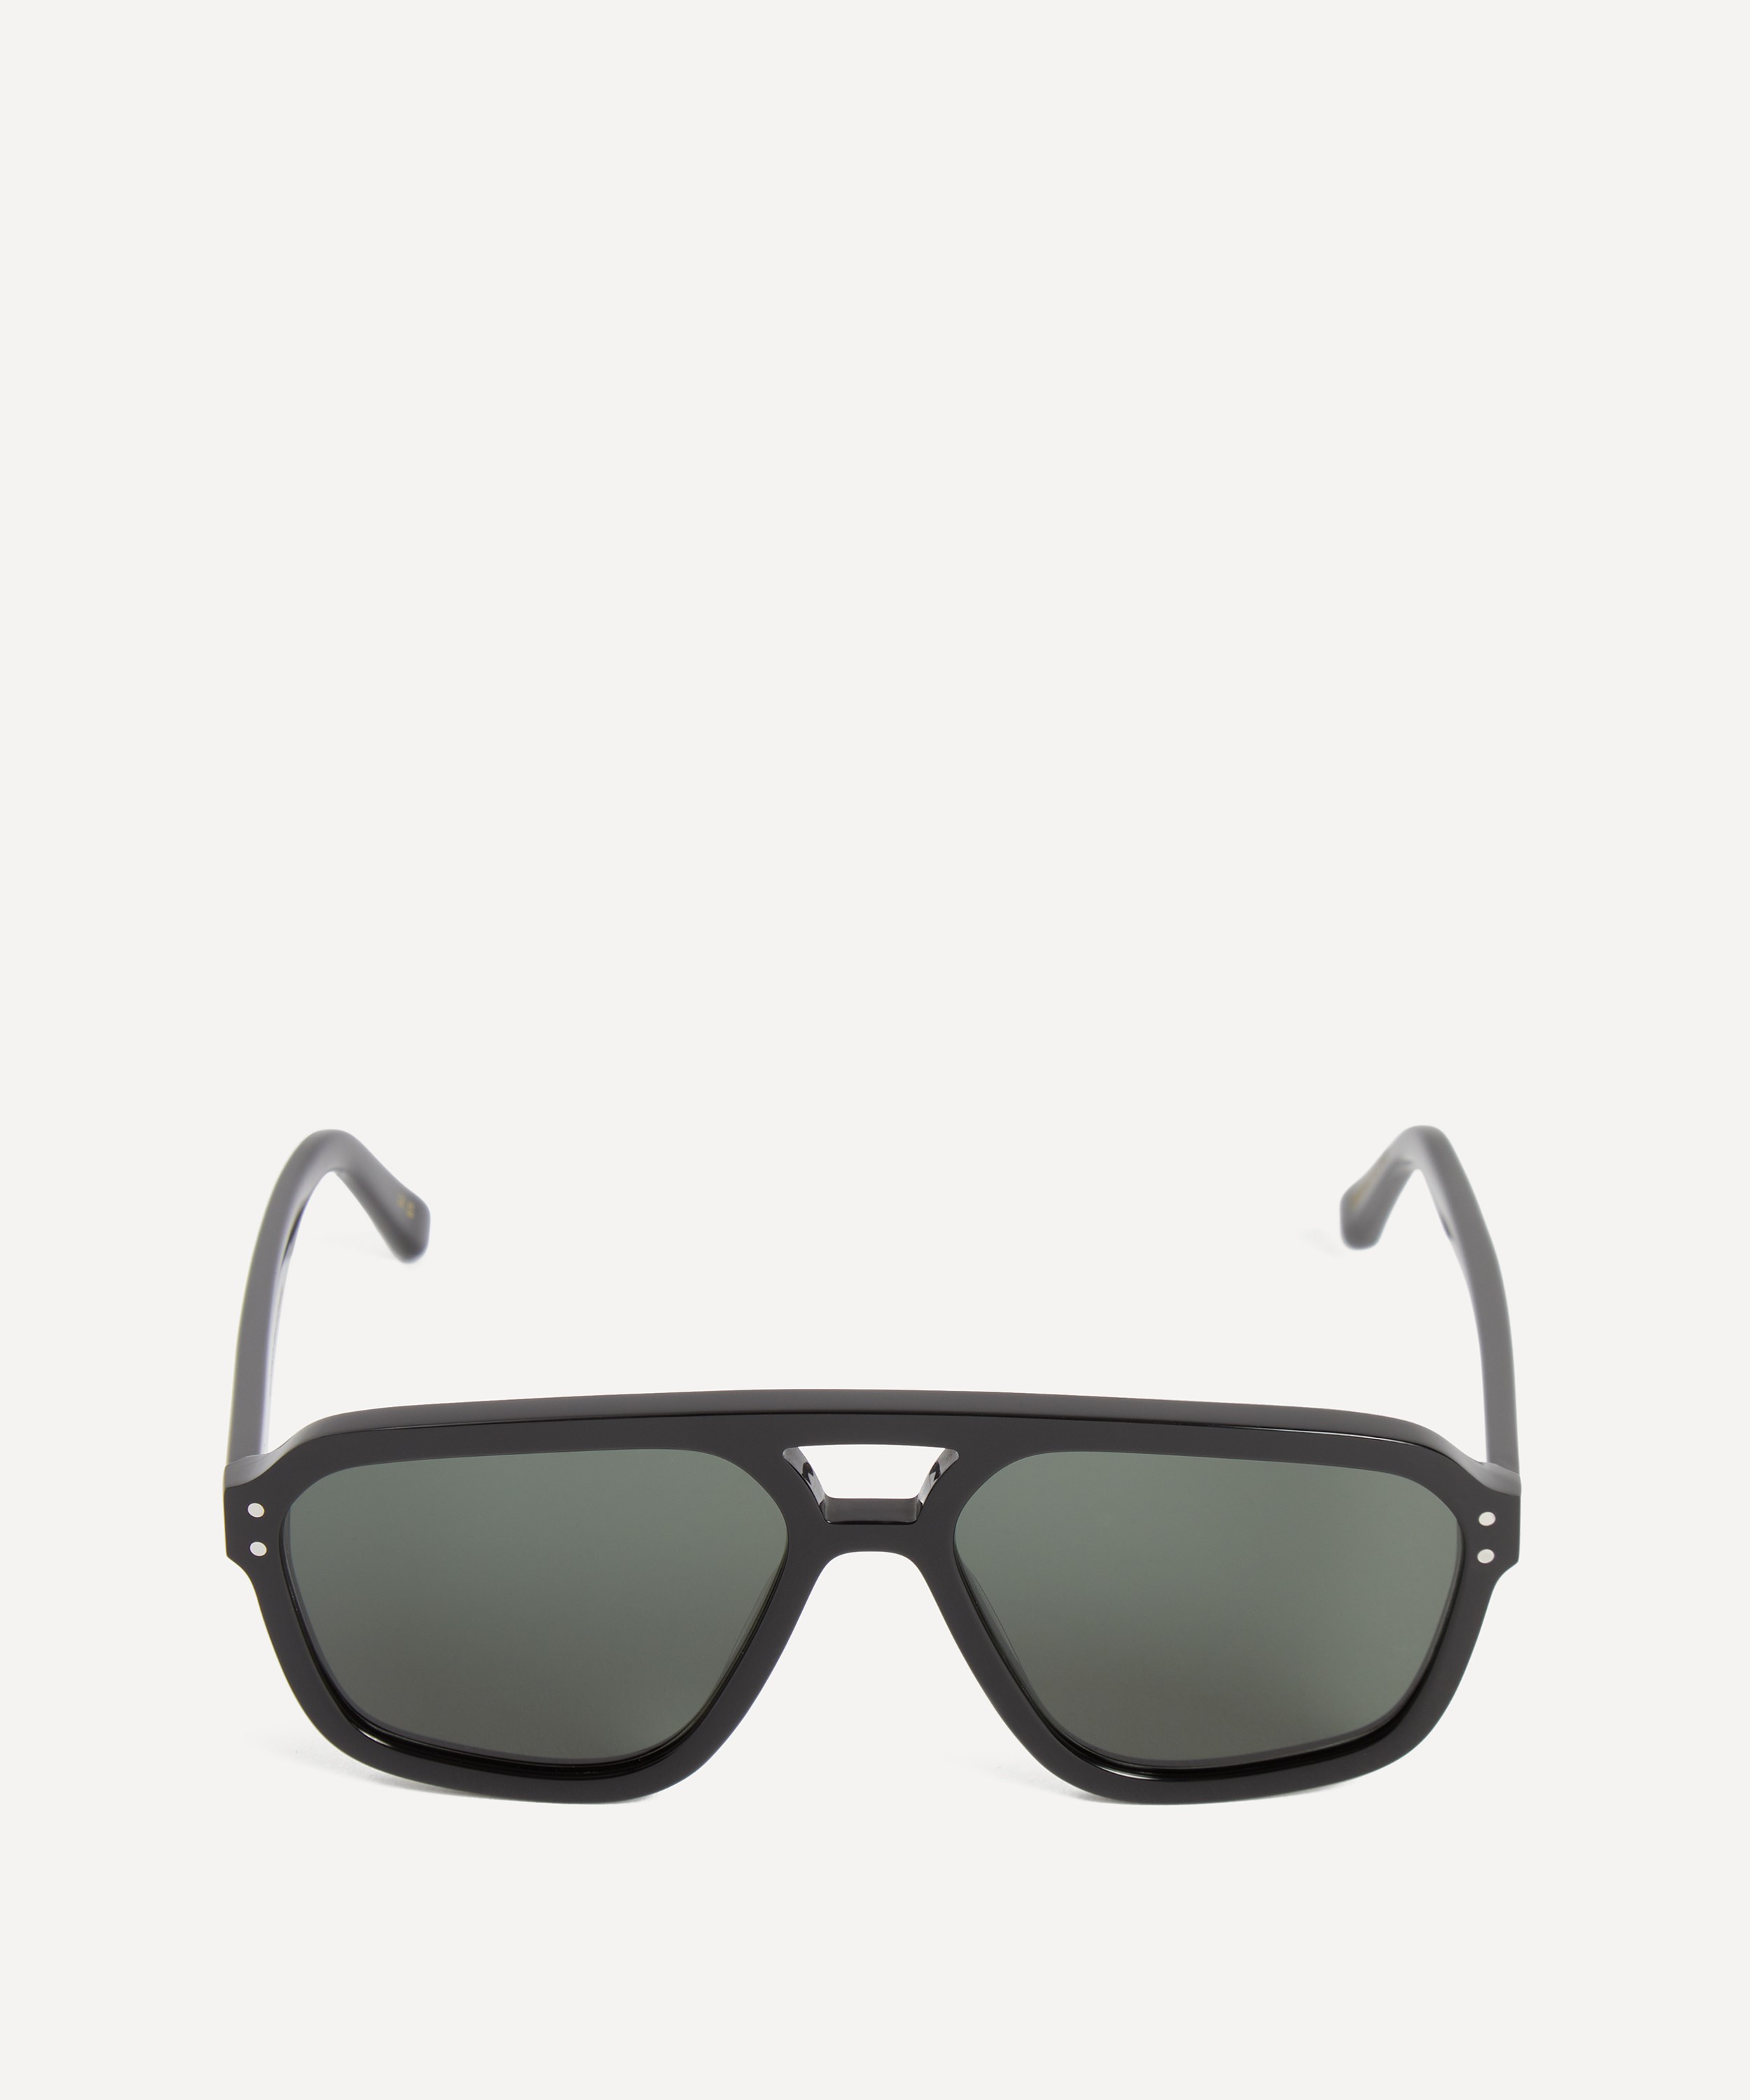 Monokel Eyewear - Jet Aviator Sunglasses image number 0